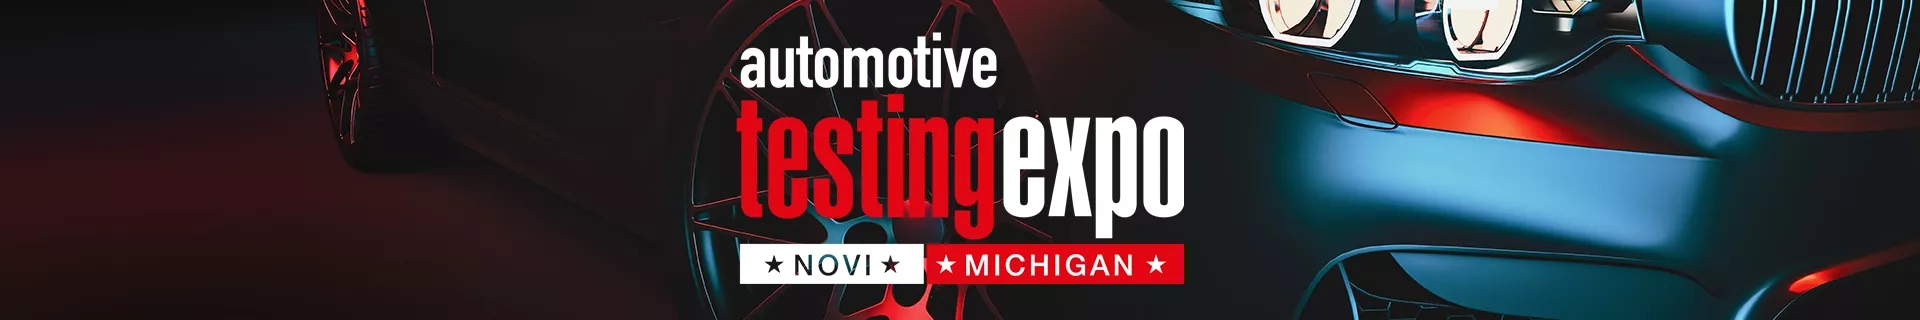 Header image Automotive Testing Expo Novi Michigan USA